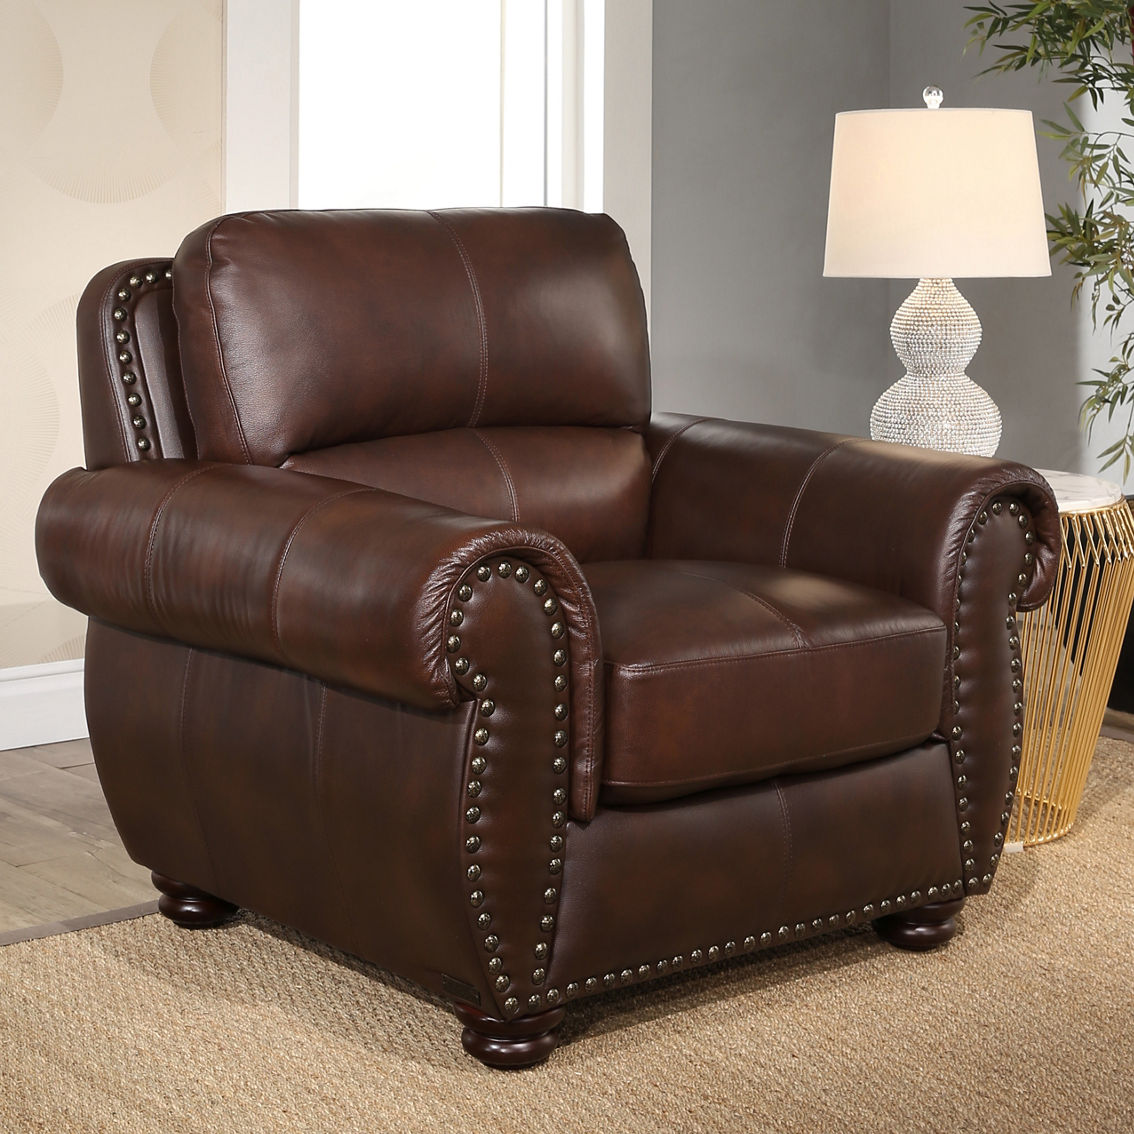 Abbyson Austin Leather Armchair - Image 2 of 5